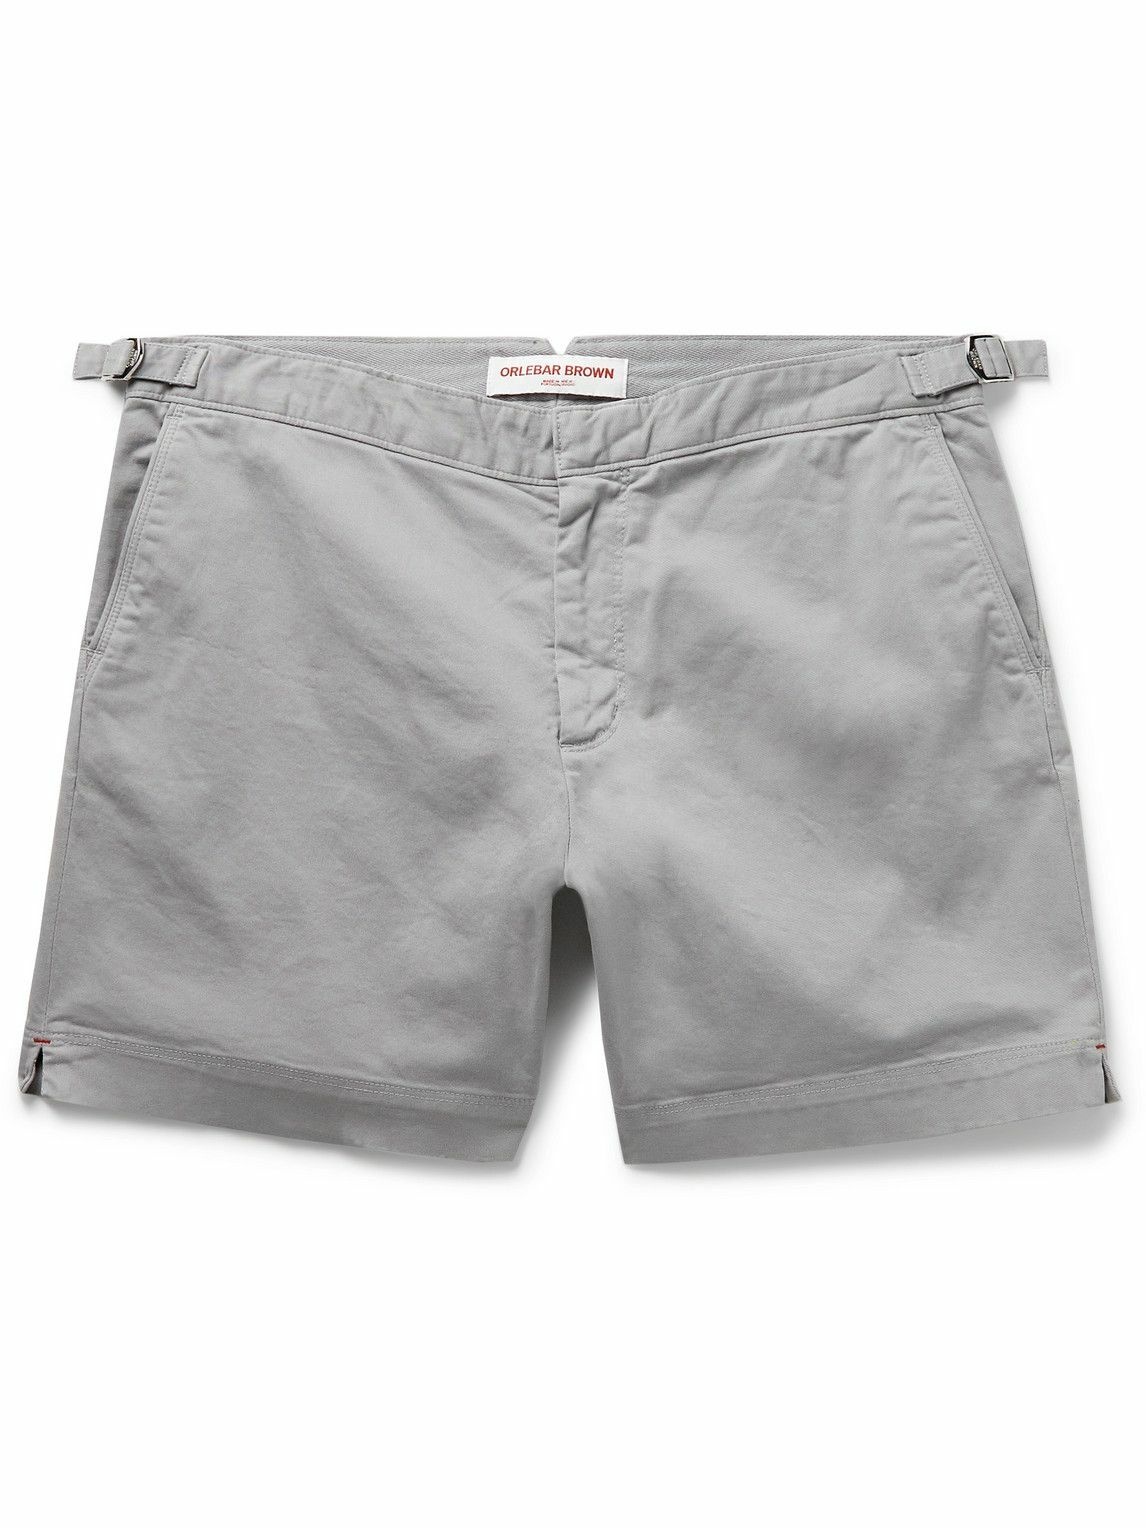 Orlebar Brown - Bulldog Slim-Fit Cotton-Blend Twill Shorts - Gray ...